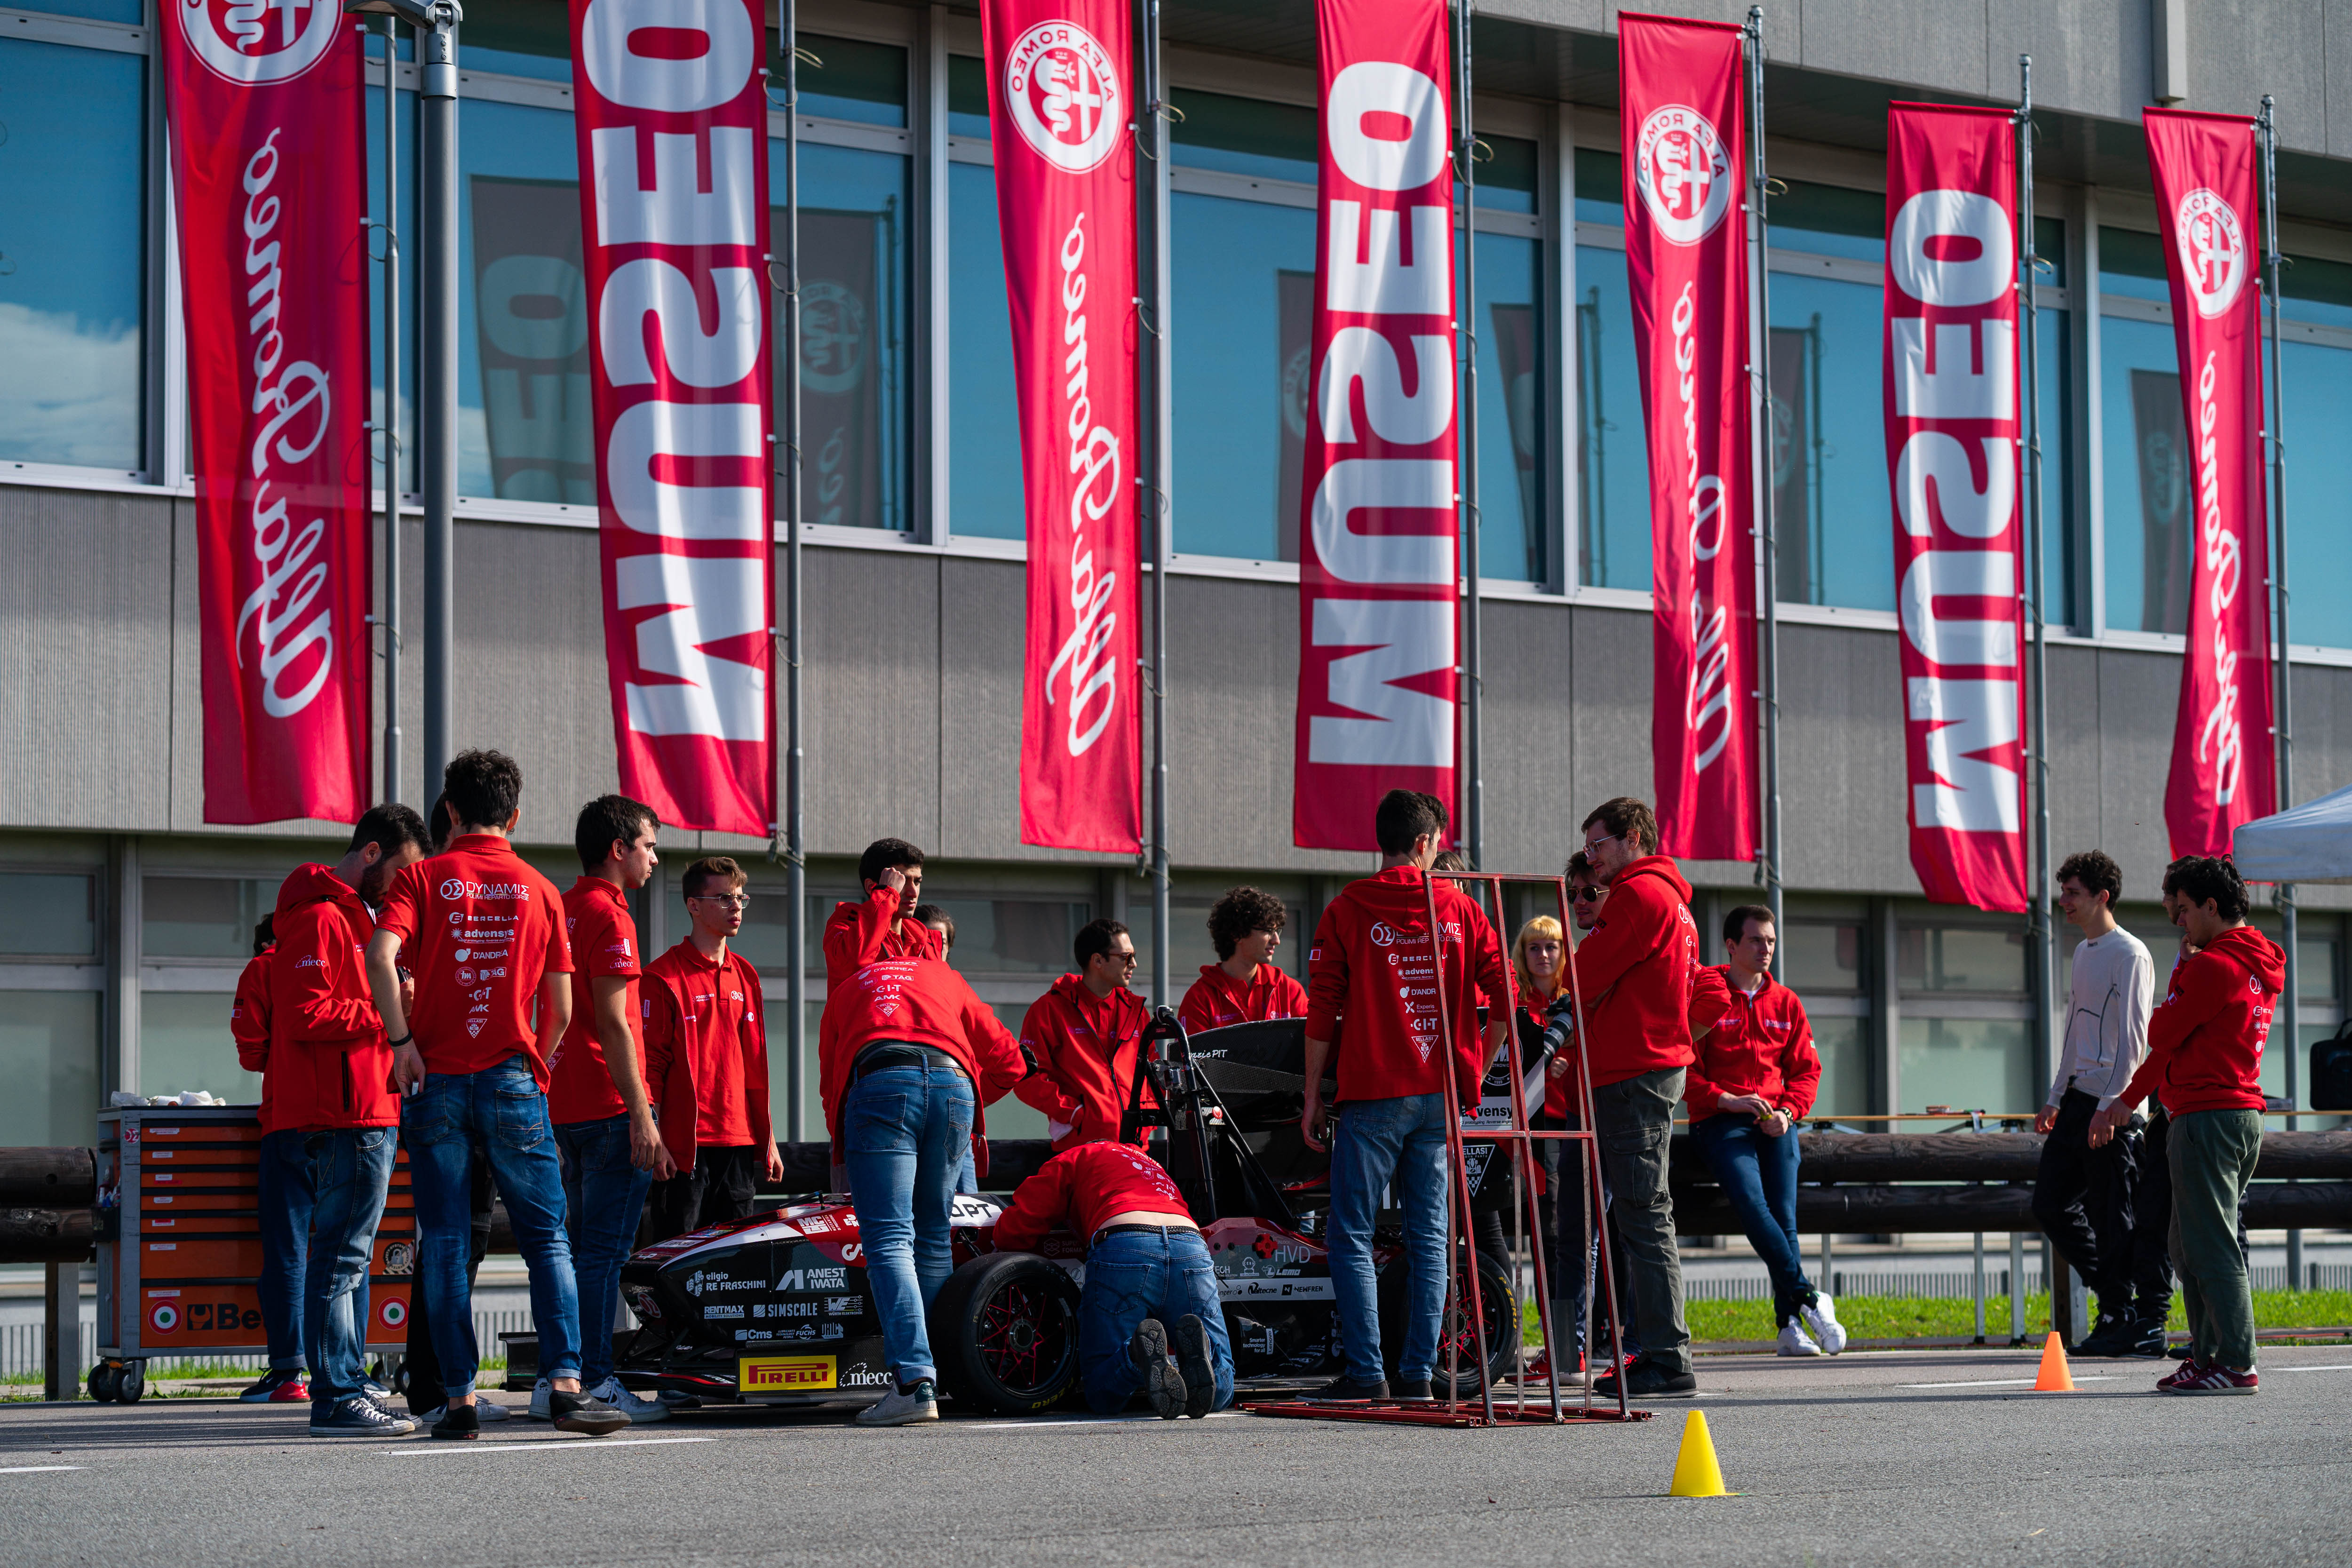 Photos of the Milan Polytechnic's racing team analyzing a single-seater formula 1 car